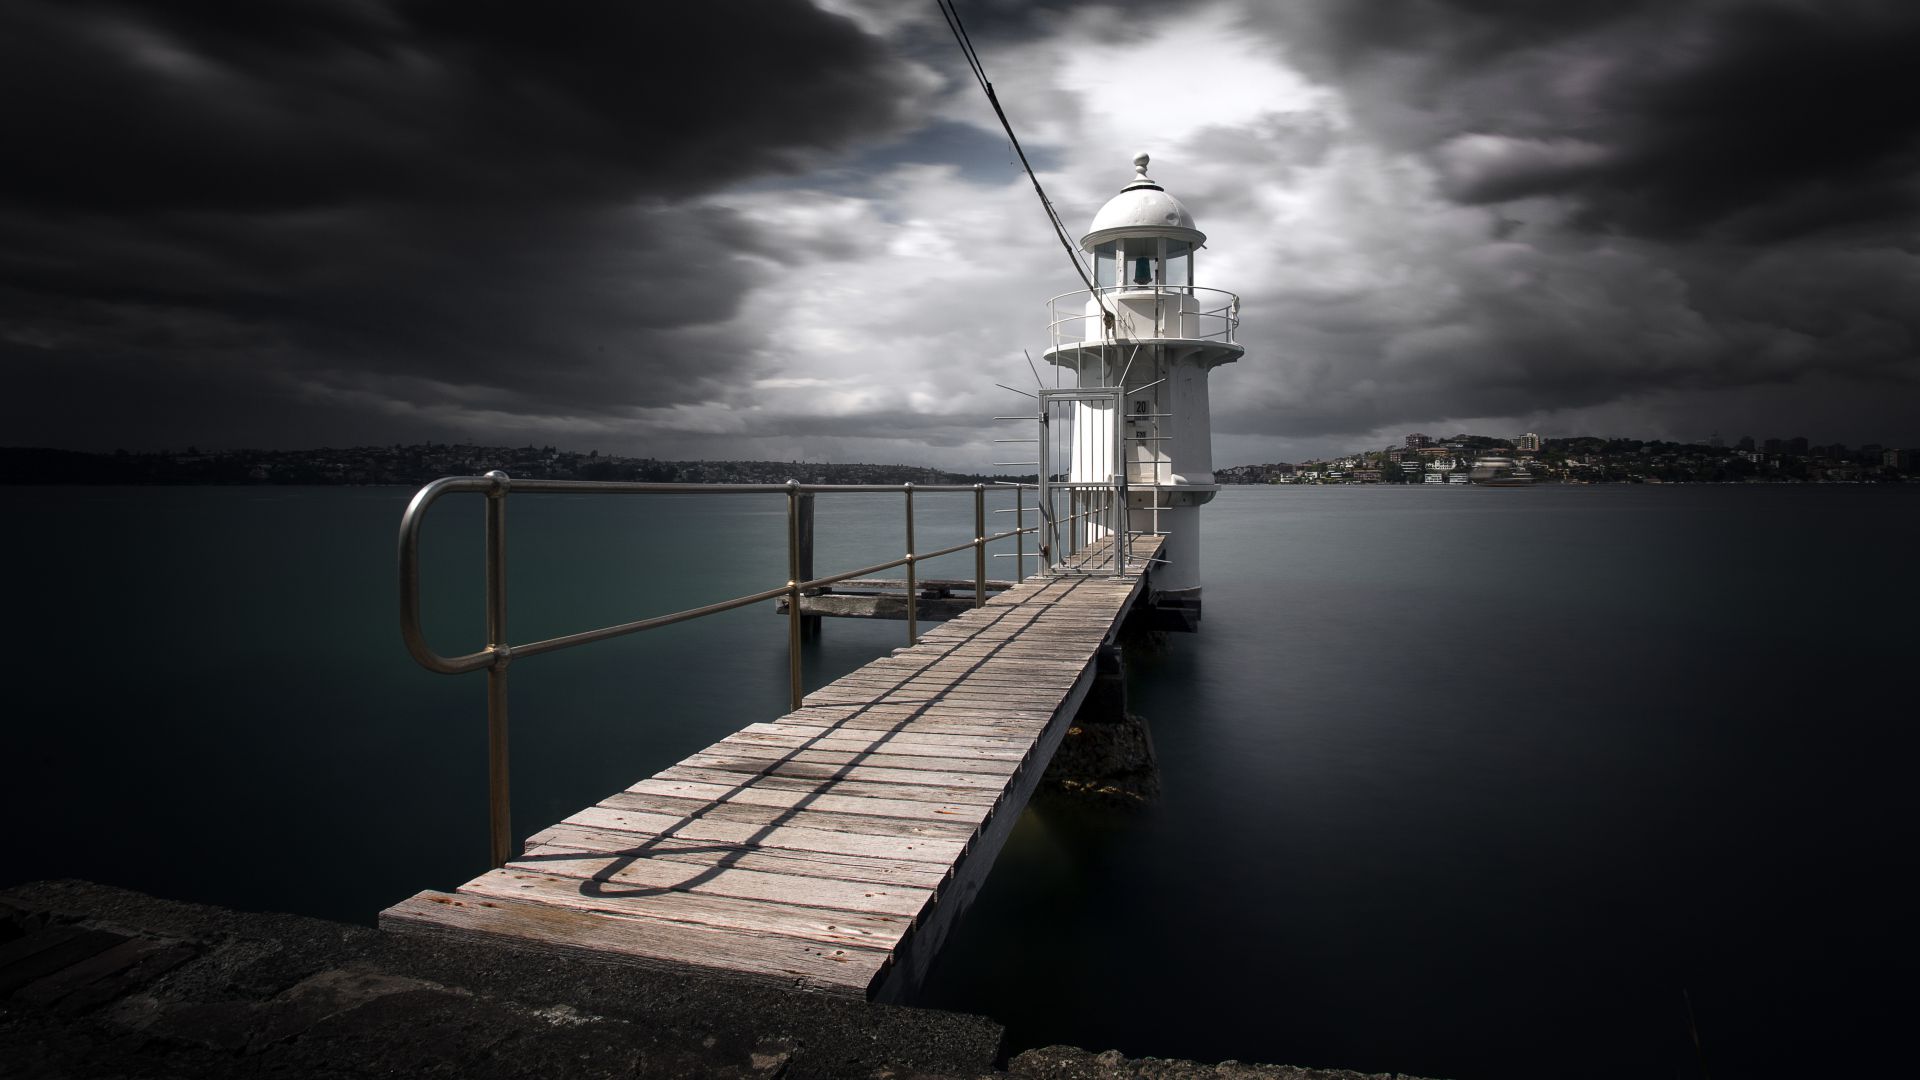 Сидней-Харбор, 5k, 4k, 8k, маяк, река, облака пирс, Sydney Harbour, 5k, 4k wallpaper, 8k, lighthouse, river, pierce, clouds (horizontal)